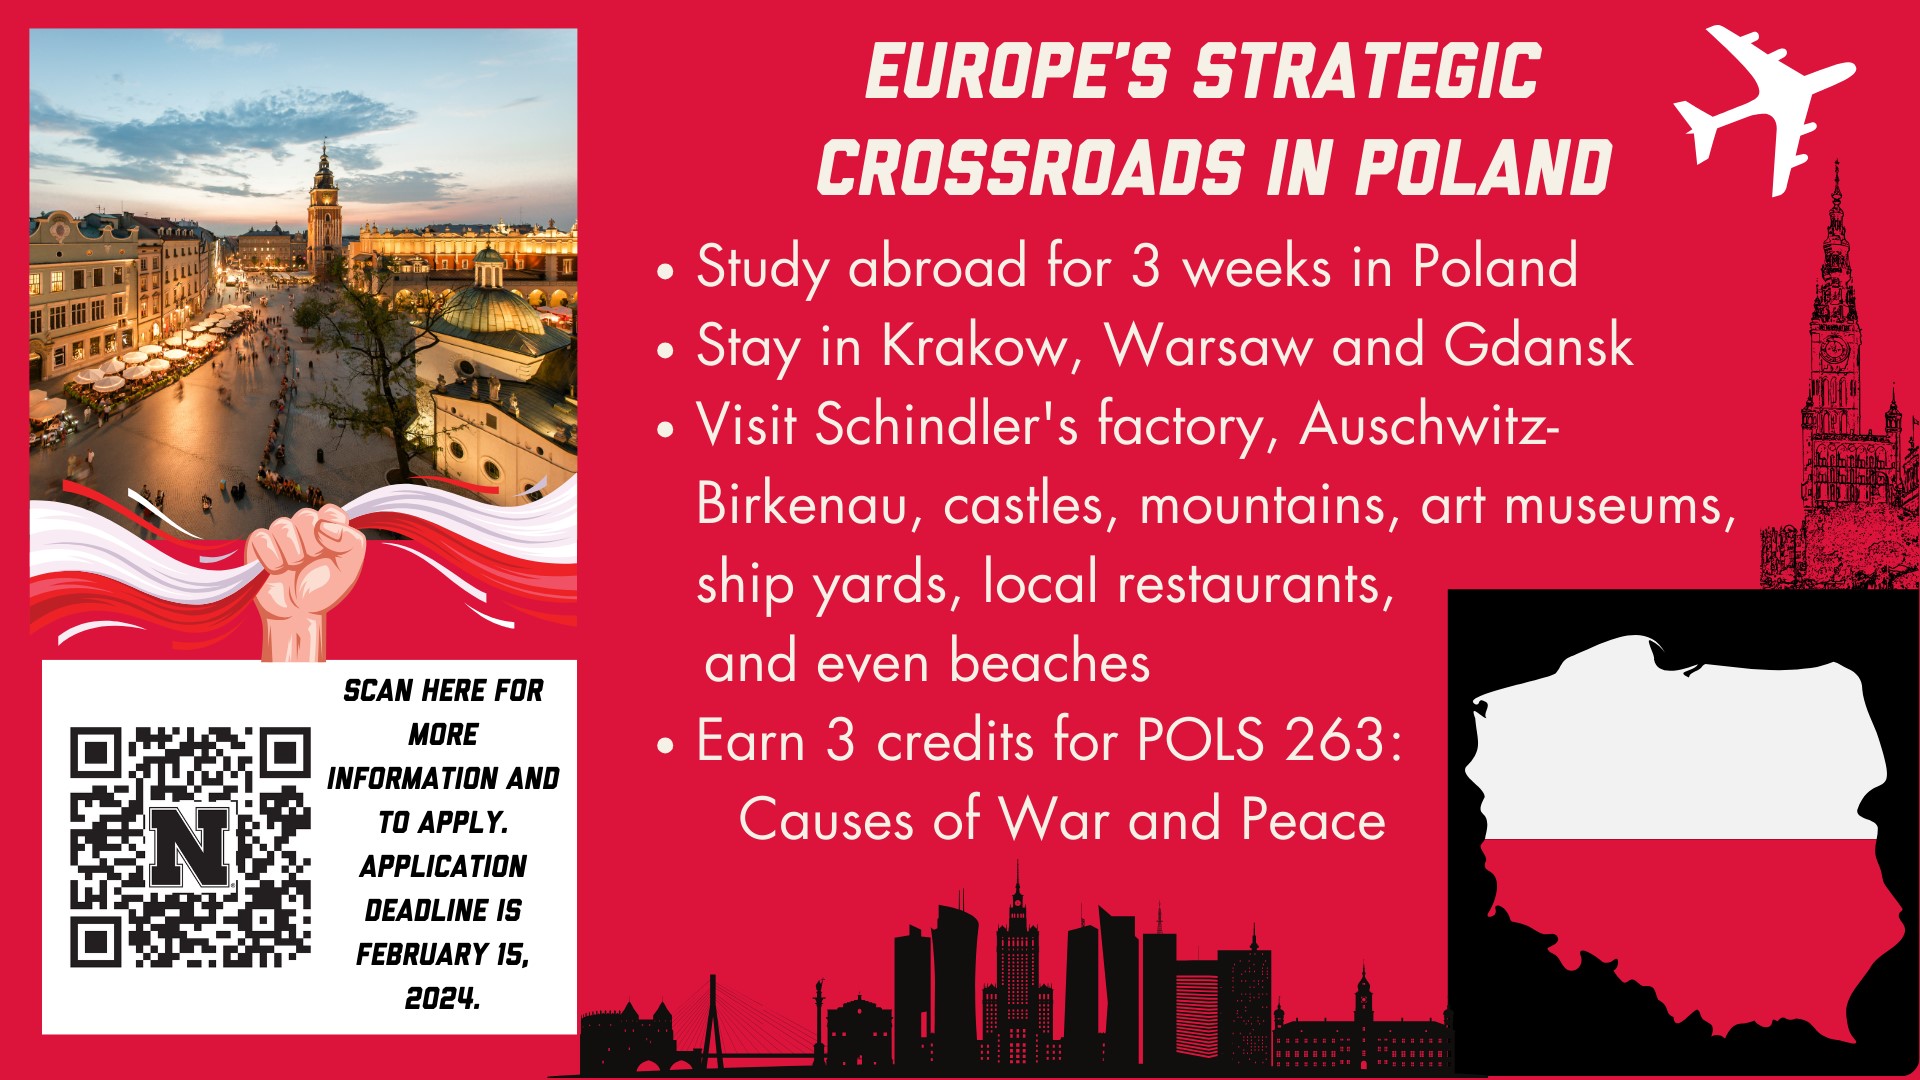 Europe's Strategic Crossroads in Poland